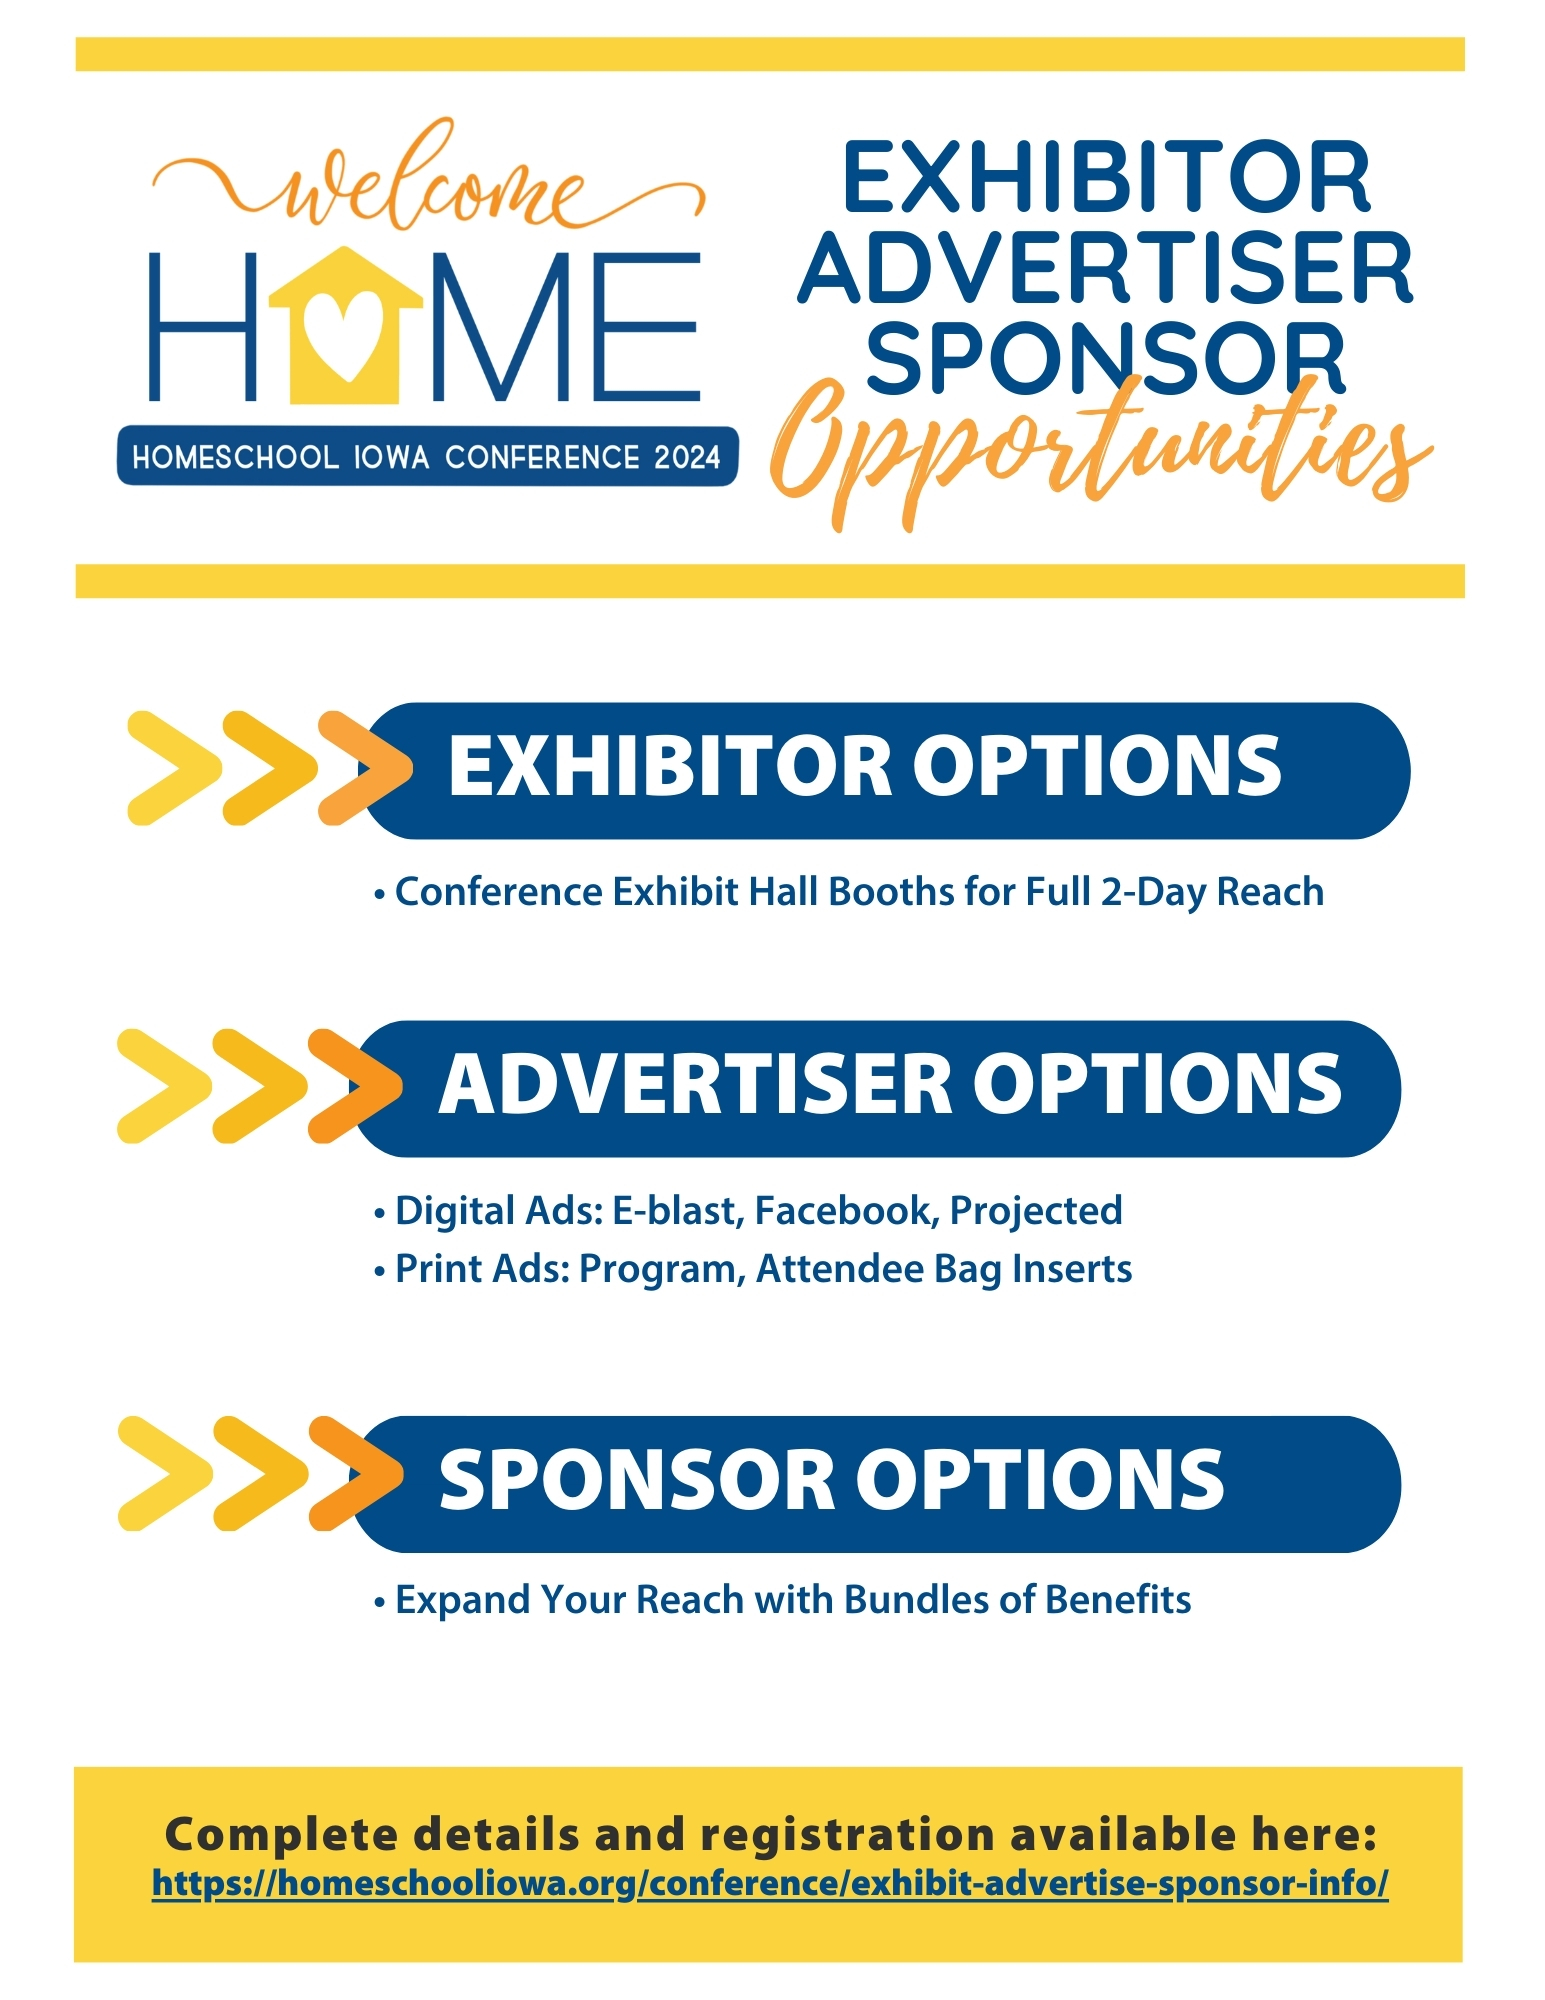 2024 Homeschool Iowa Conference Exhibitor Advertiser Sponsor Information